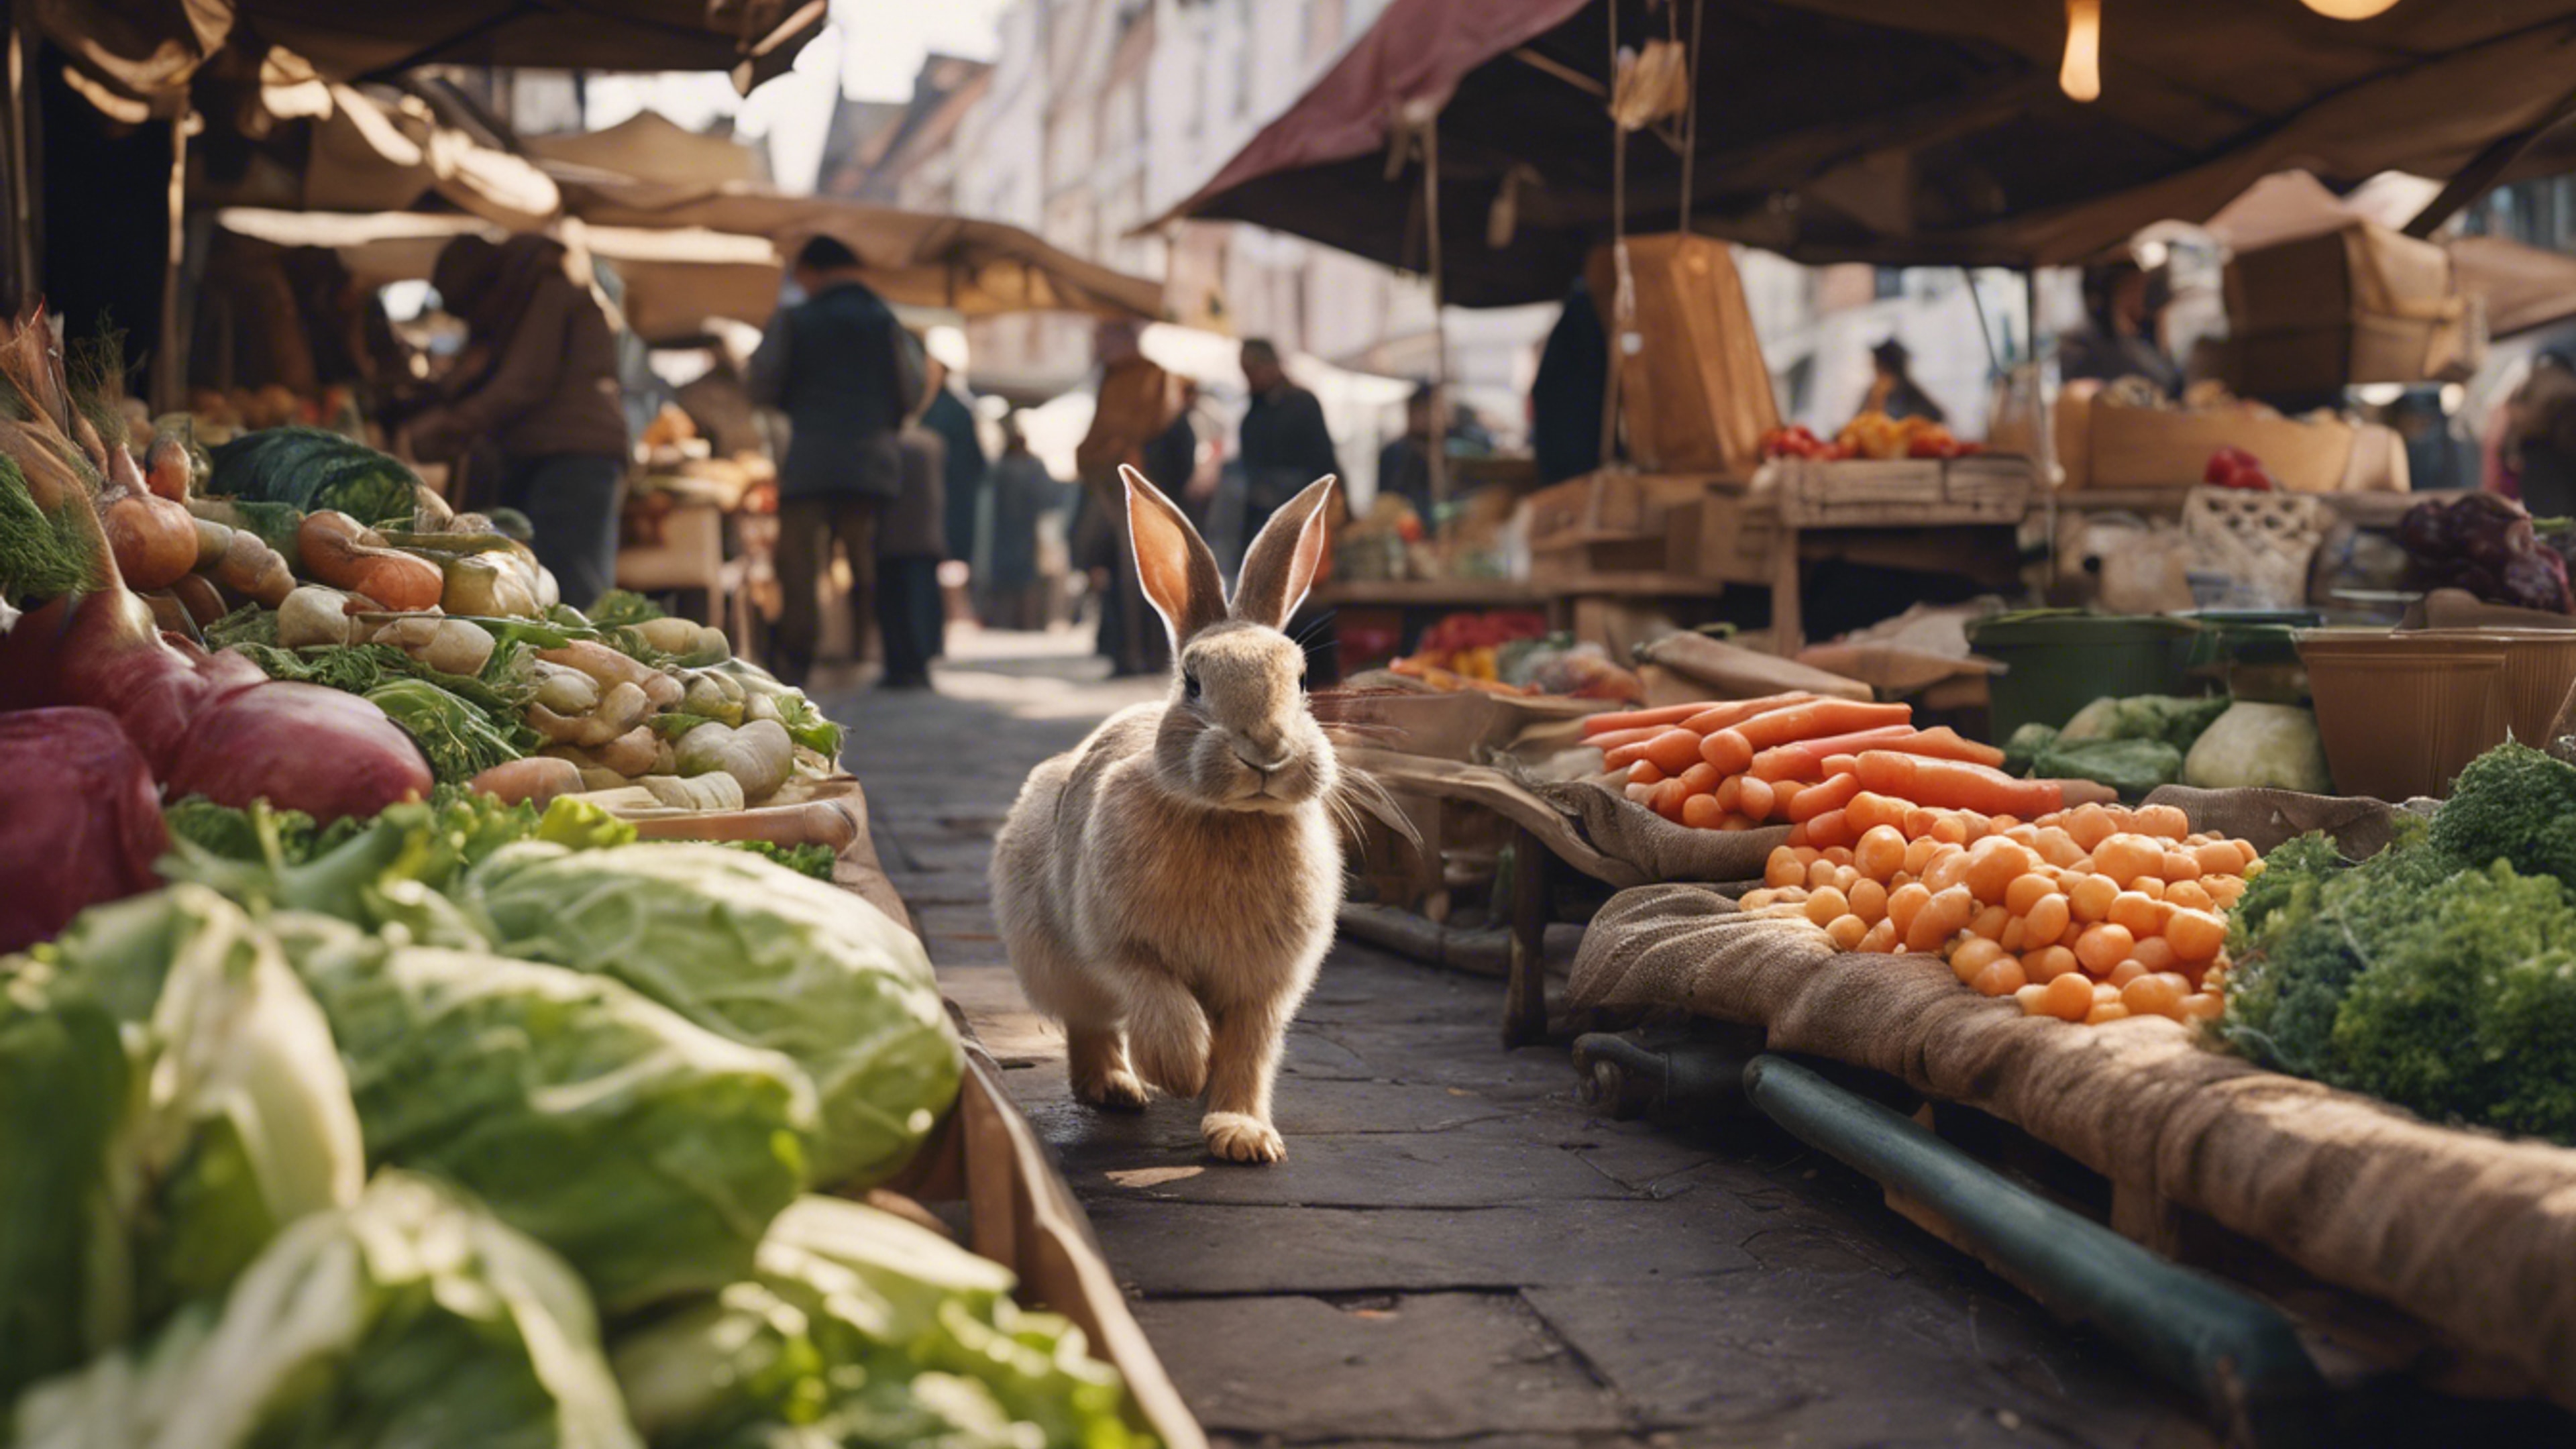 A rabbit running a vegetable stall in an old-fashioned market. duvar kağıdı[95b88699917c48c6bf62]